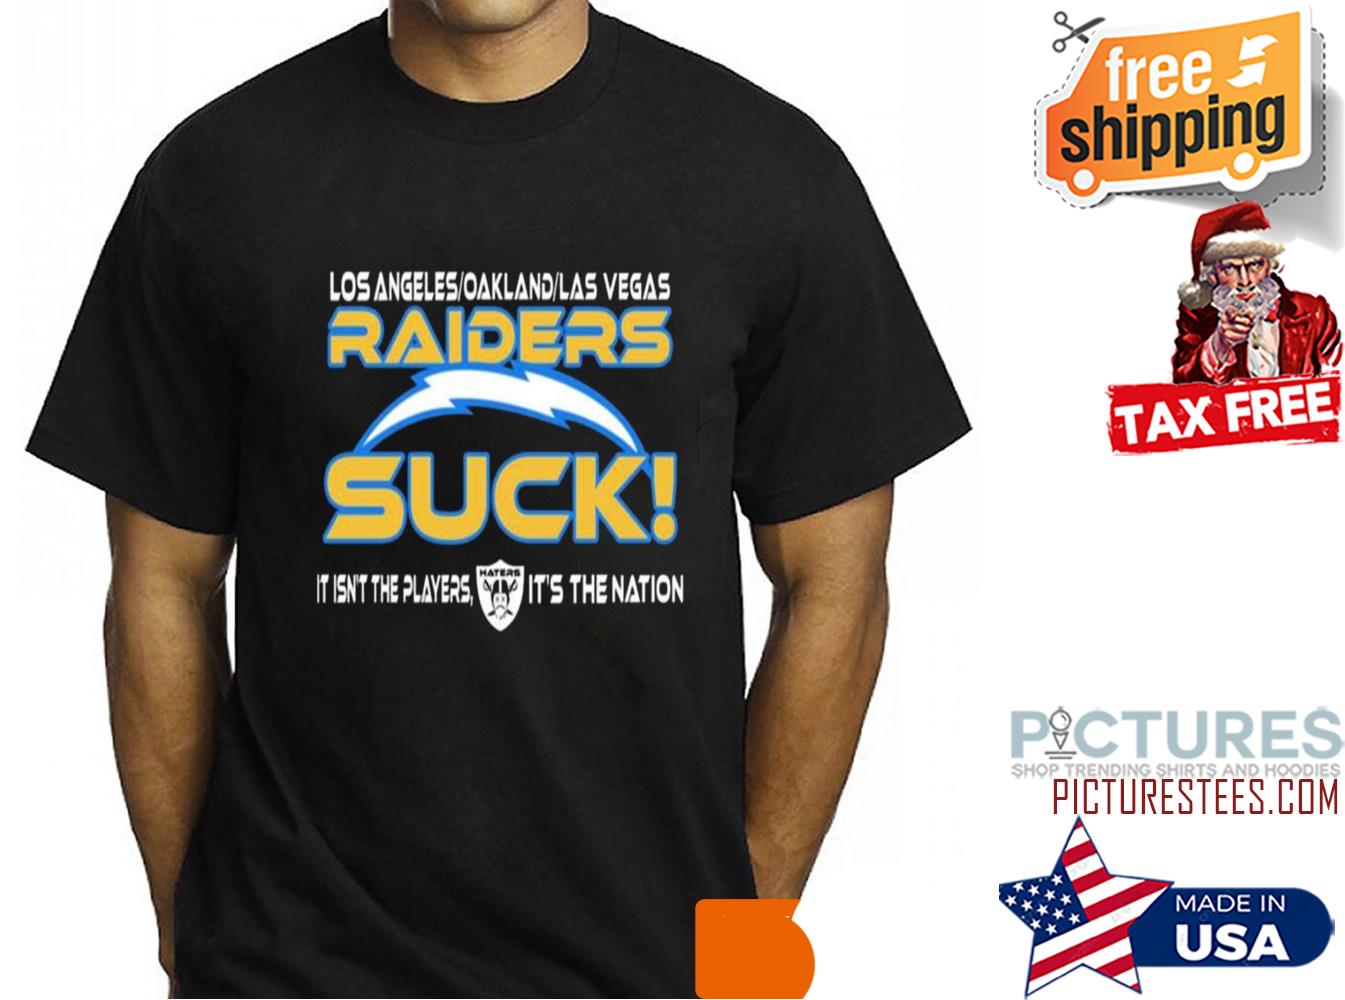 Las Vegas Raiders jersey free shipping